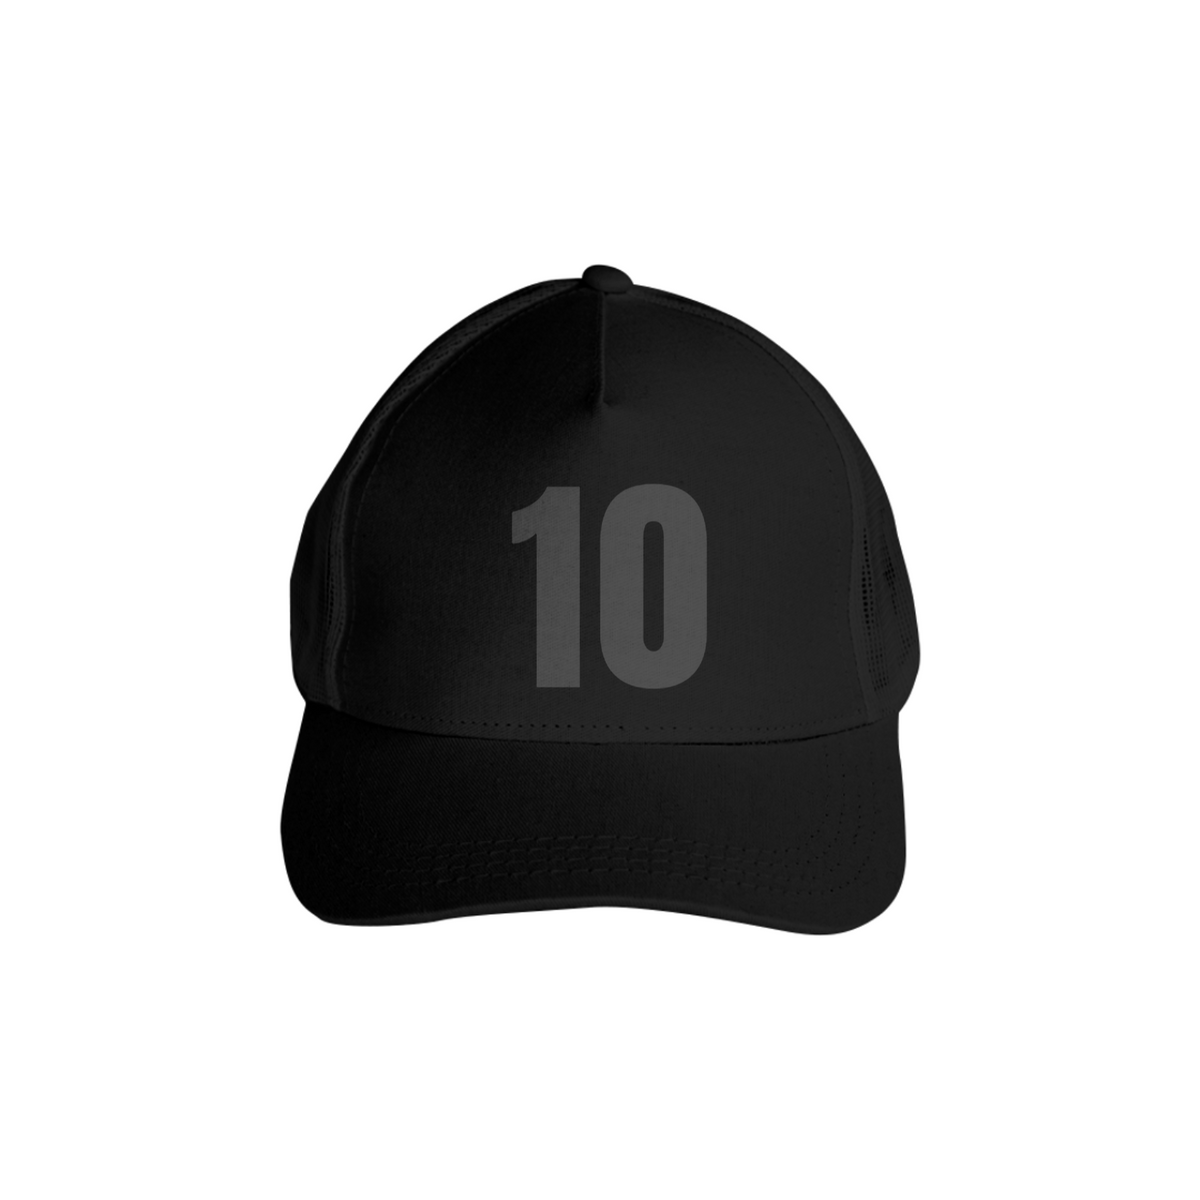 Nome do produto: Chapéu N°10